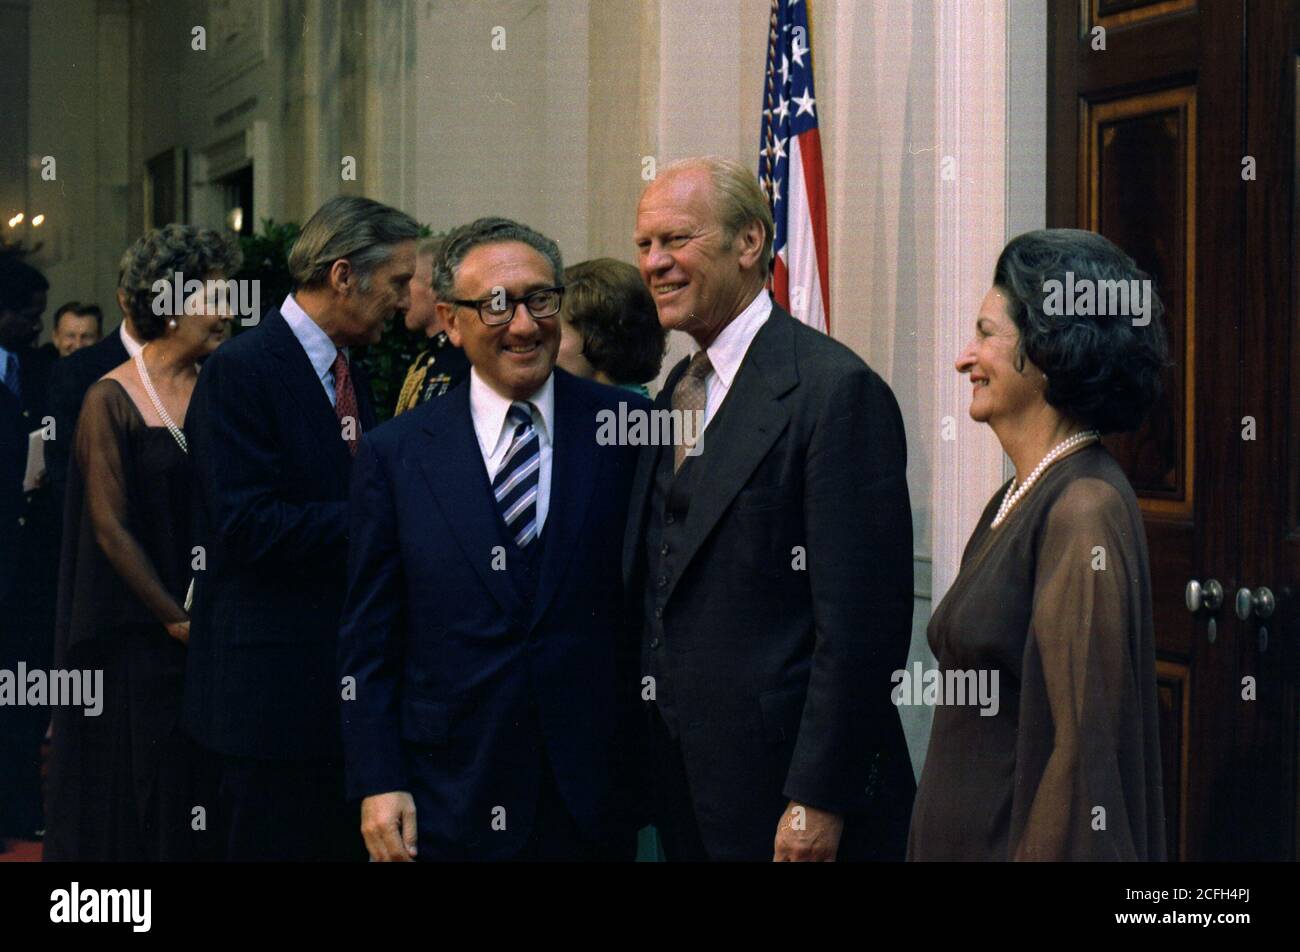 President Gerald R. Ford, Darrell Johnson, George Sparky